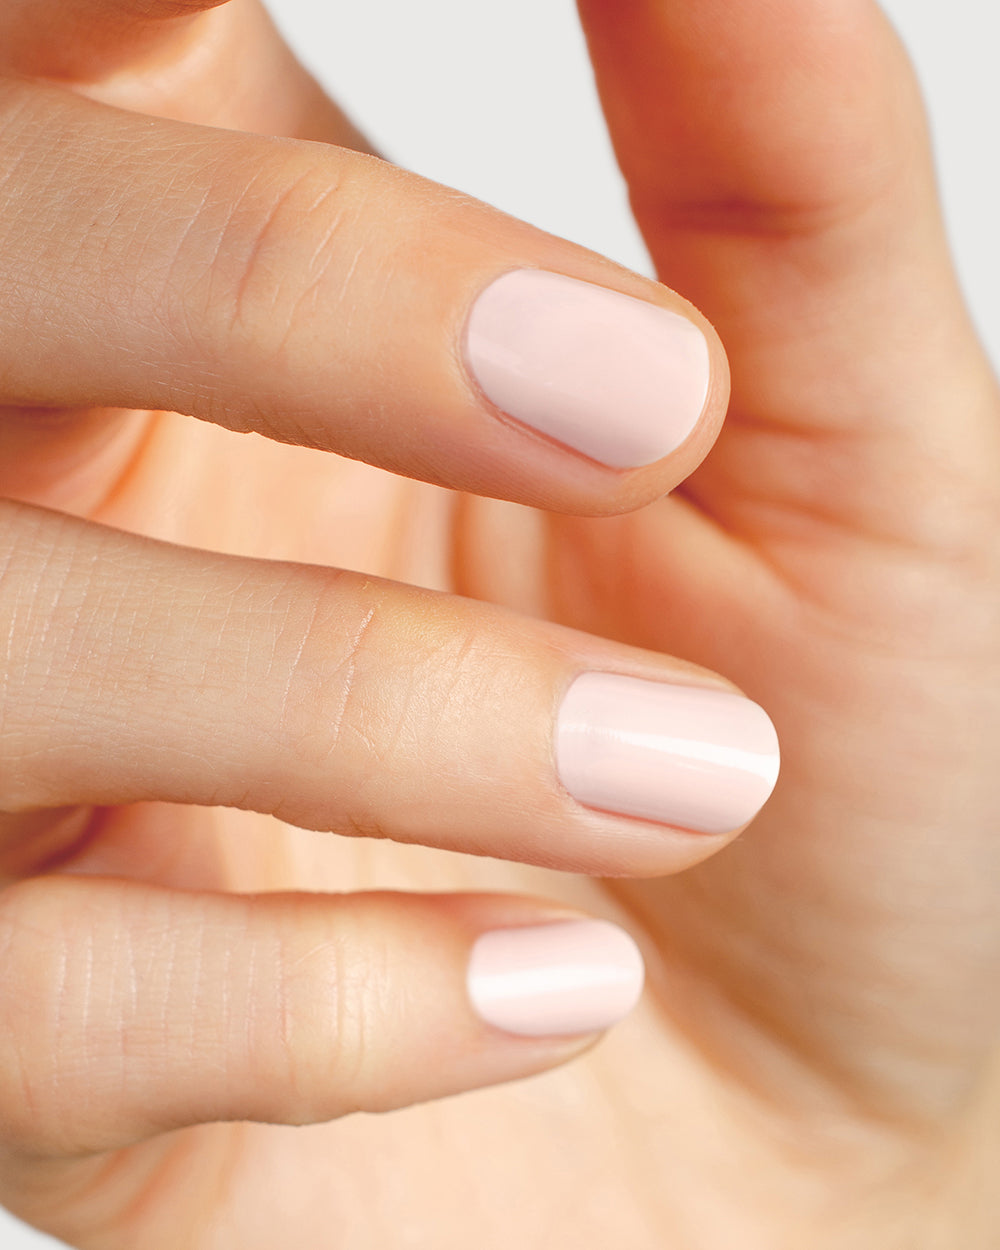 rosewater pink nail polish hand swatch on fair skin tone up close